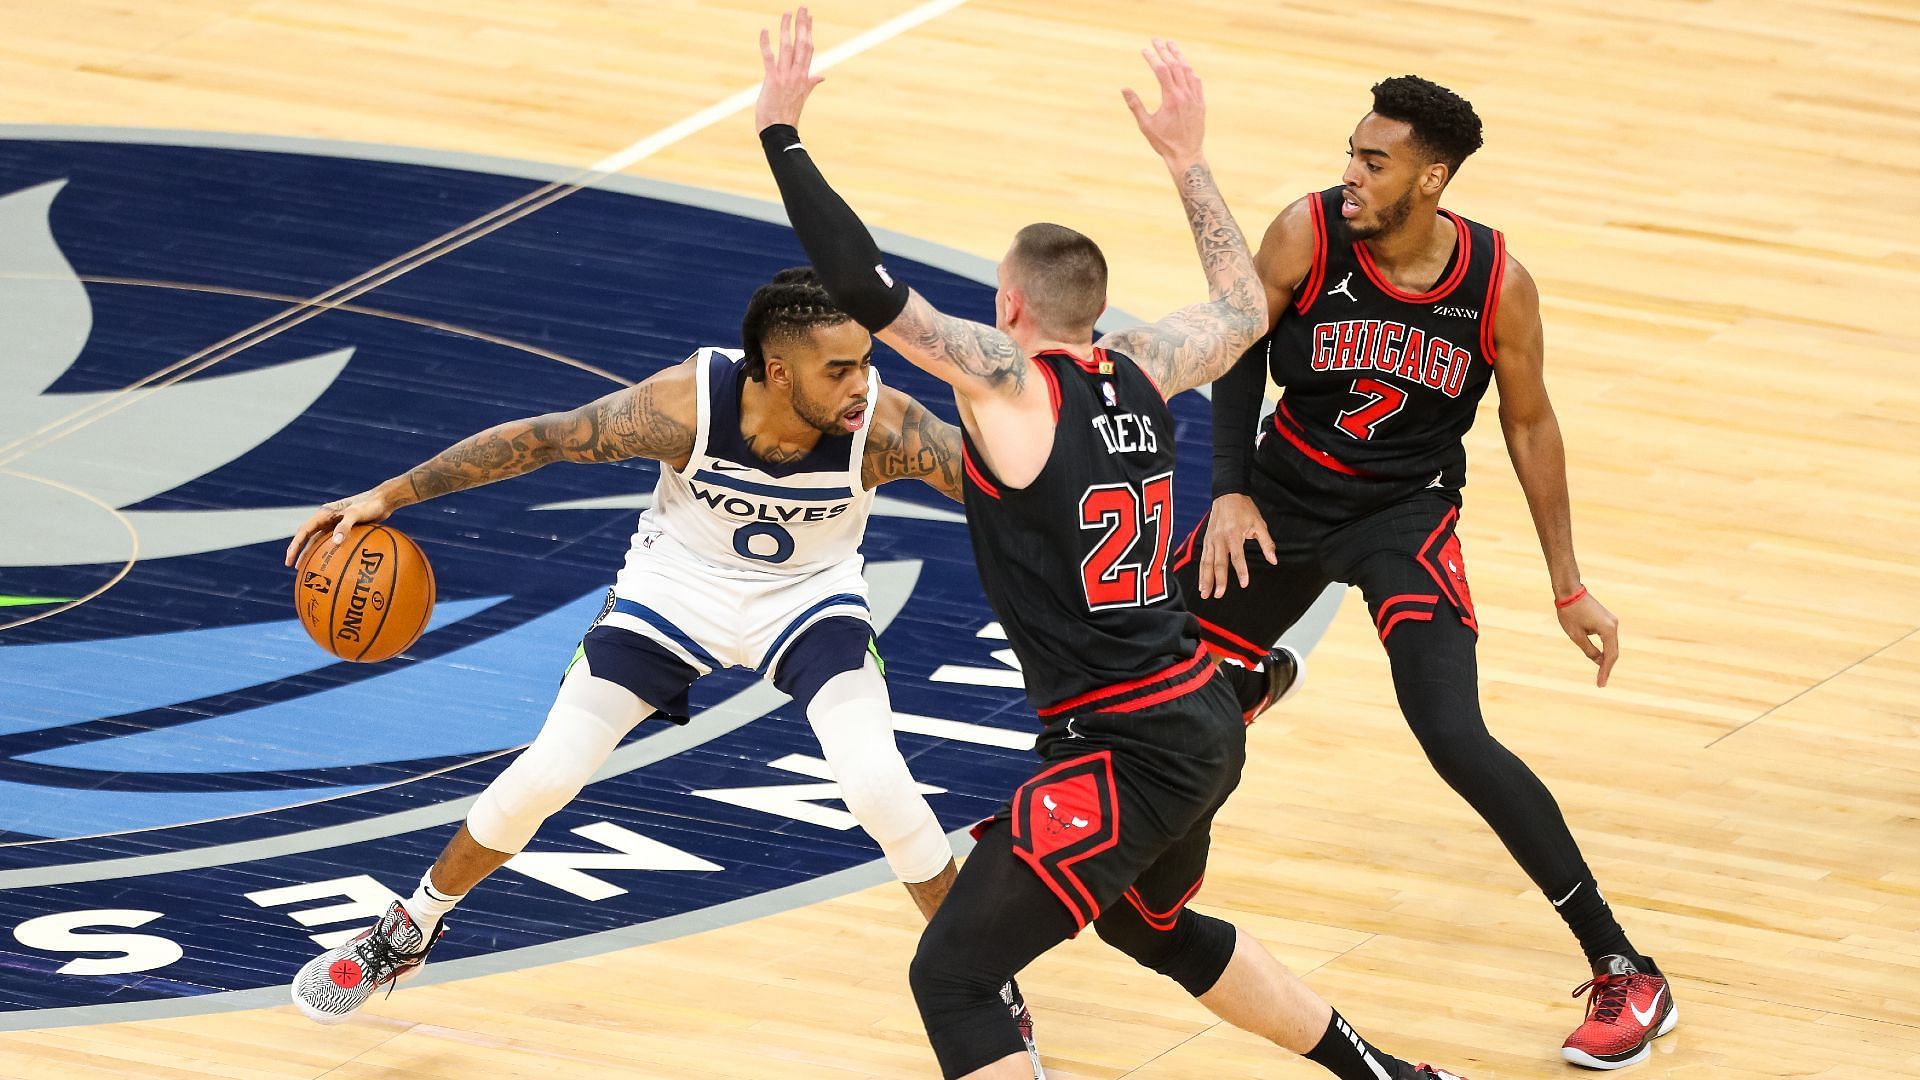 The Chicago Bulls will host the Minnesota Timberwolves on February 11 [Source: NBA.com]